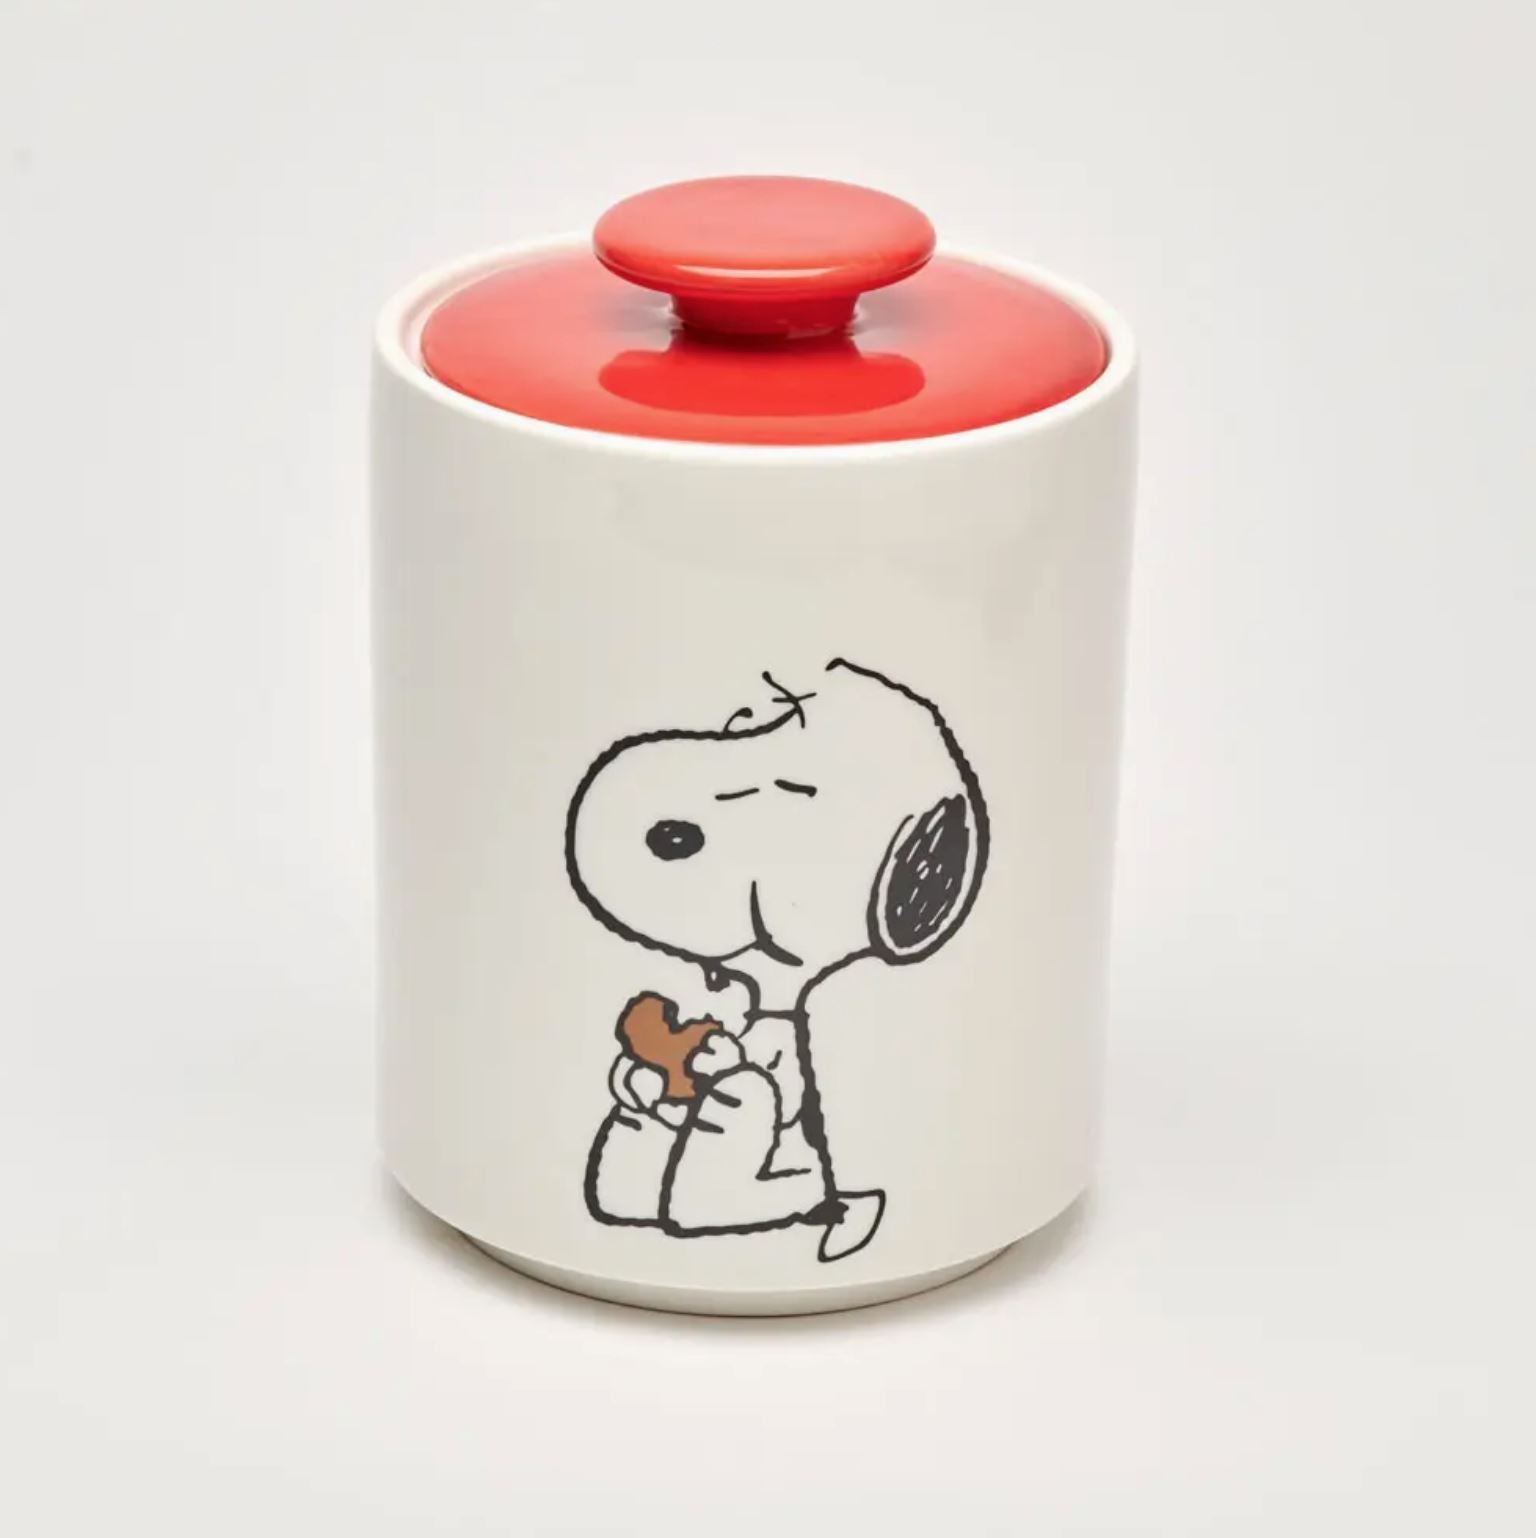 Peanuts Snoopy Cookie Jar x Magpie - Third Drawer Down